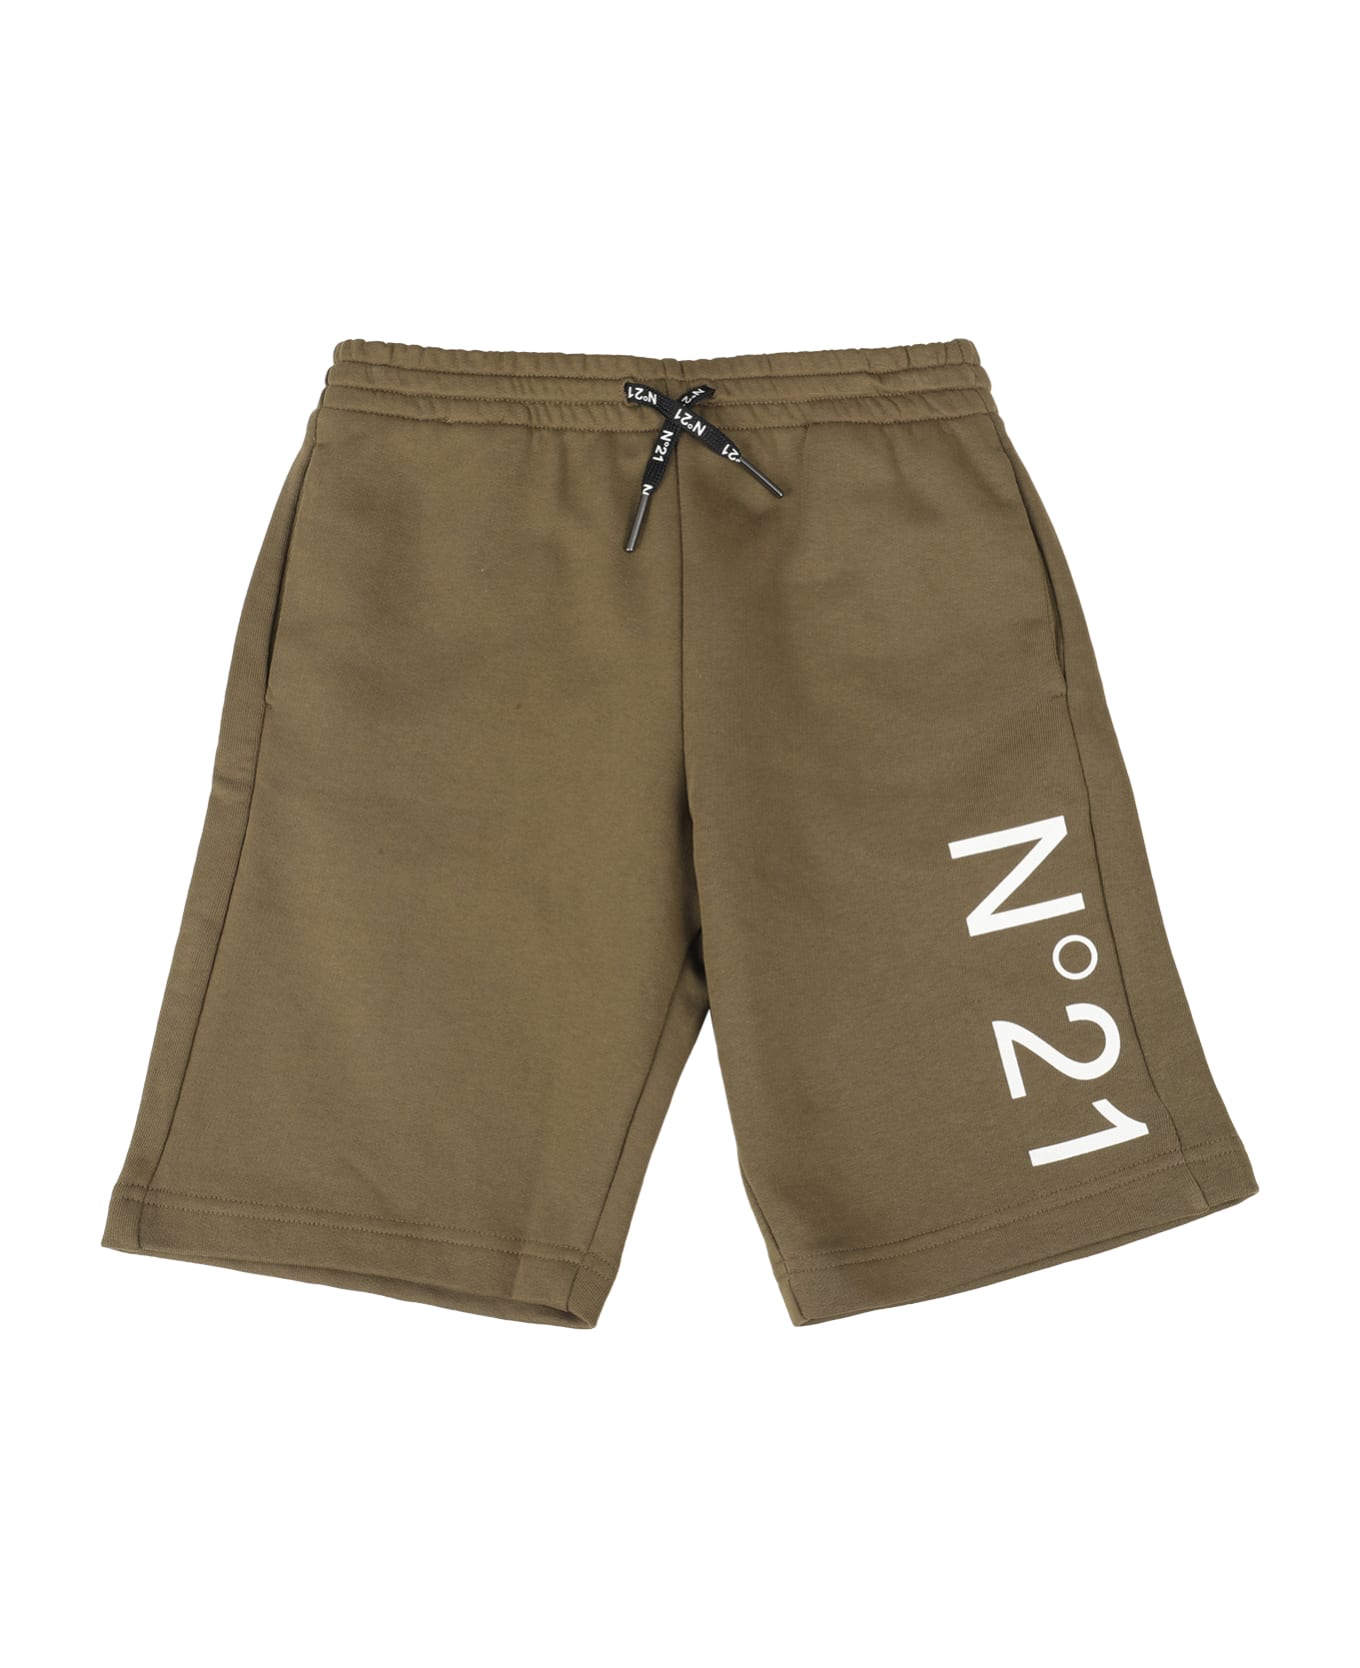 N.21 Shorts - Dark Olive Green